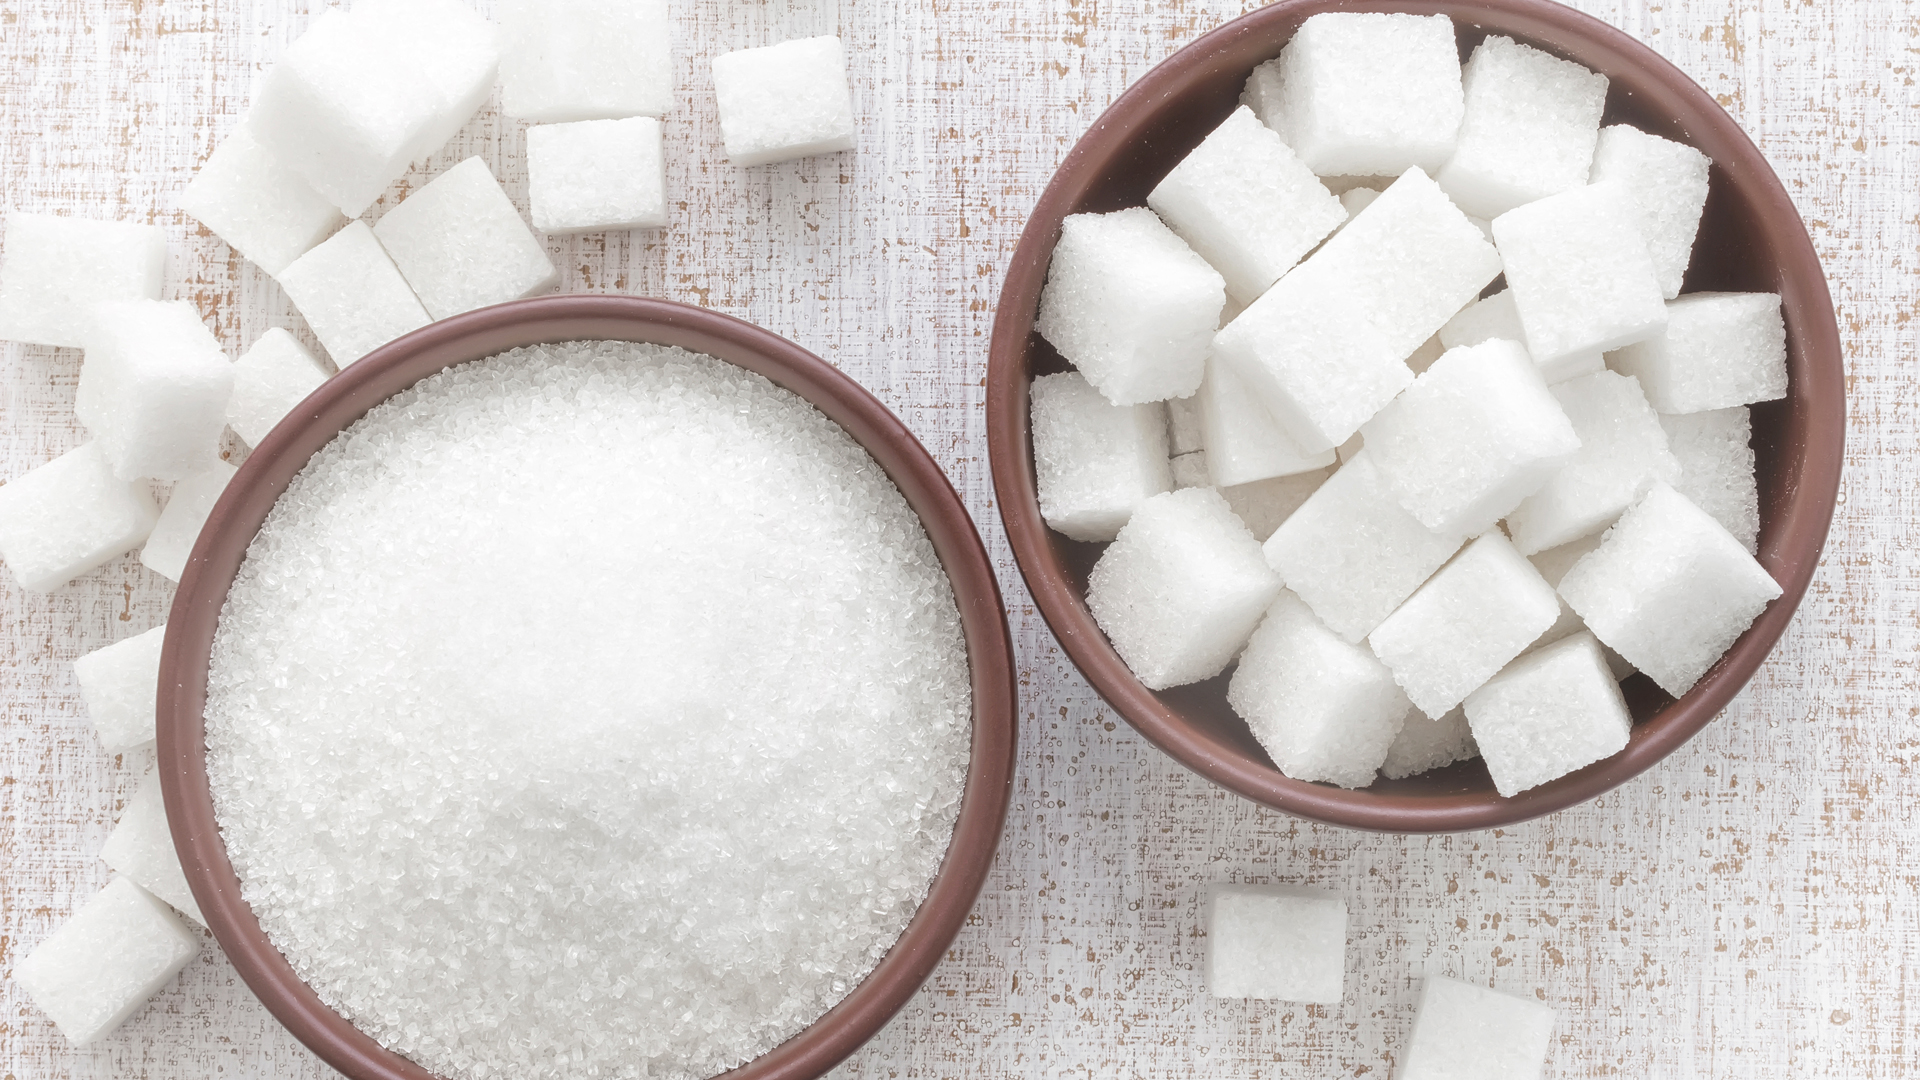  EU recorta 20% compras de azúcar mexicana